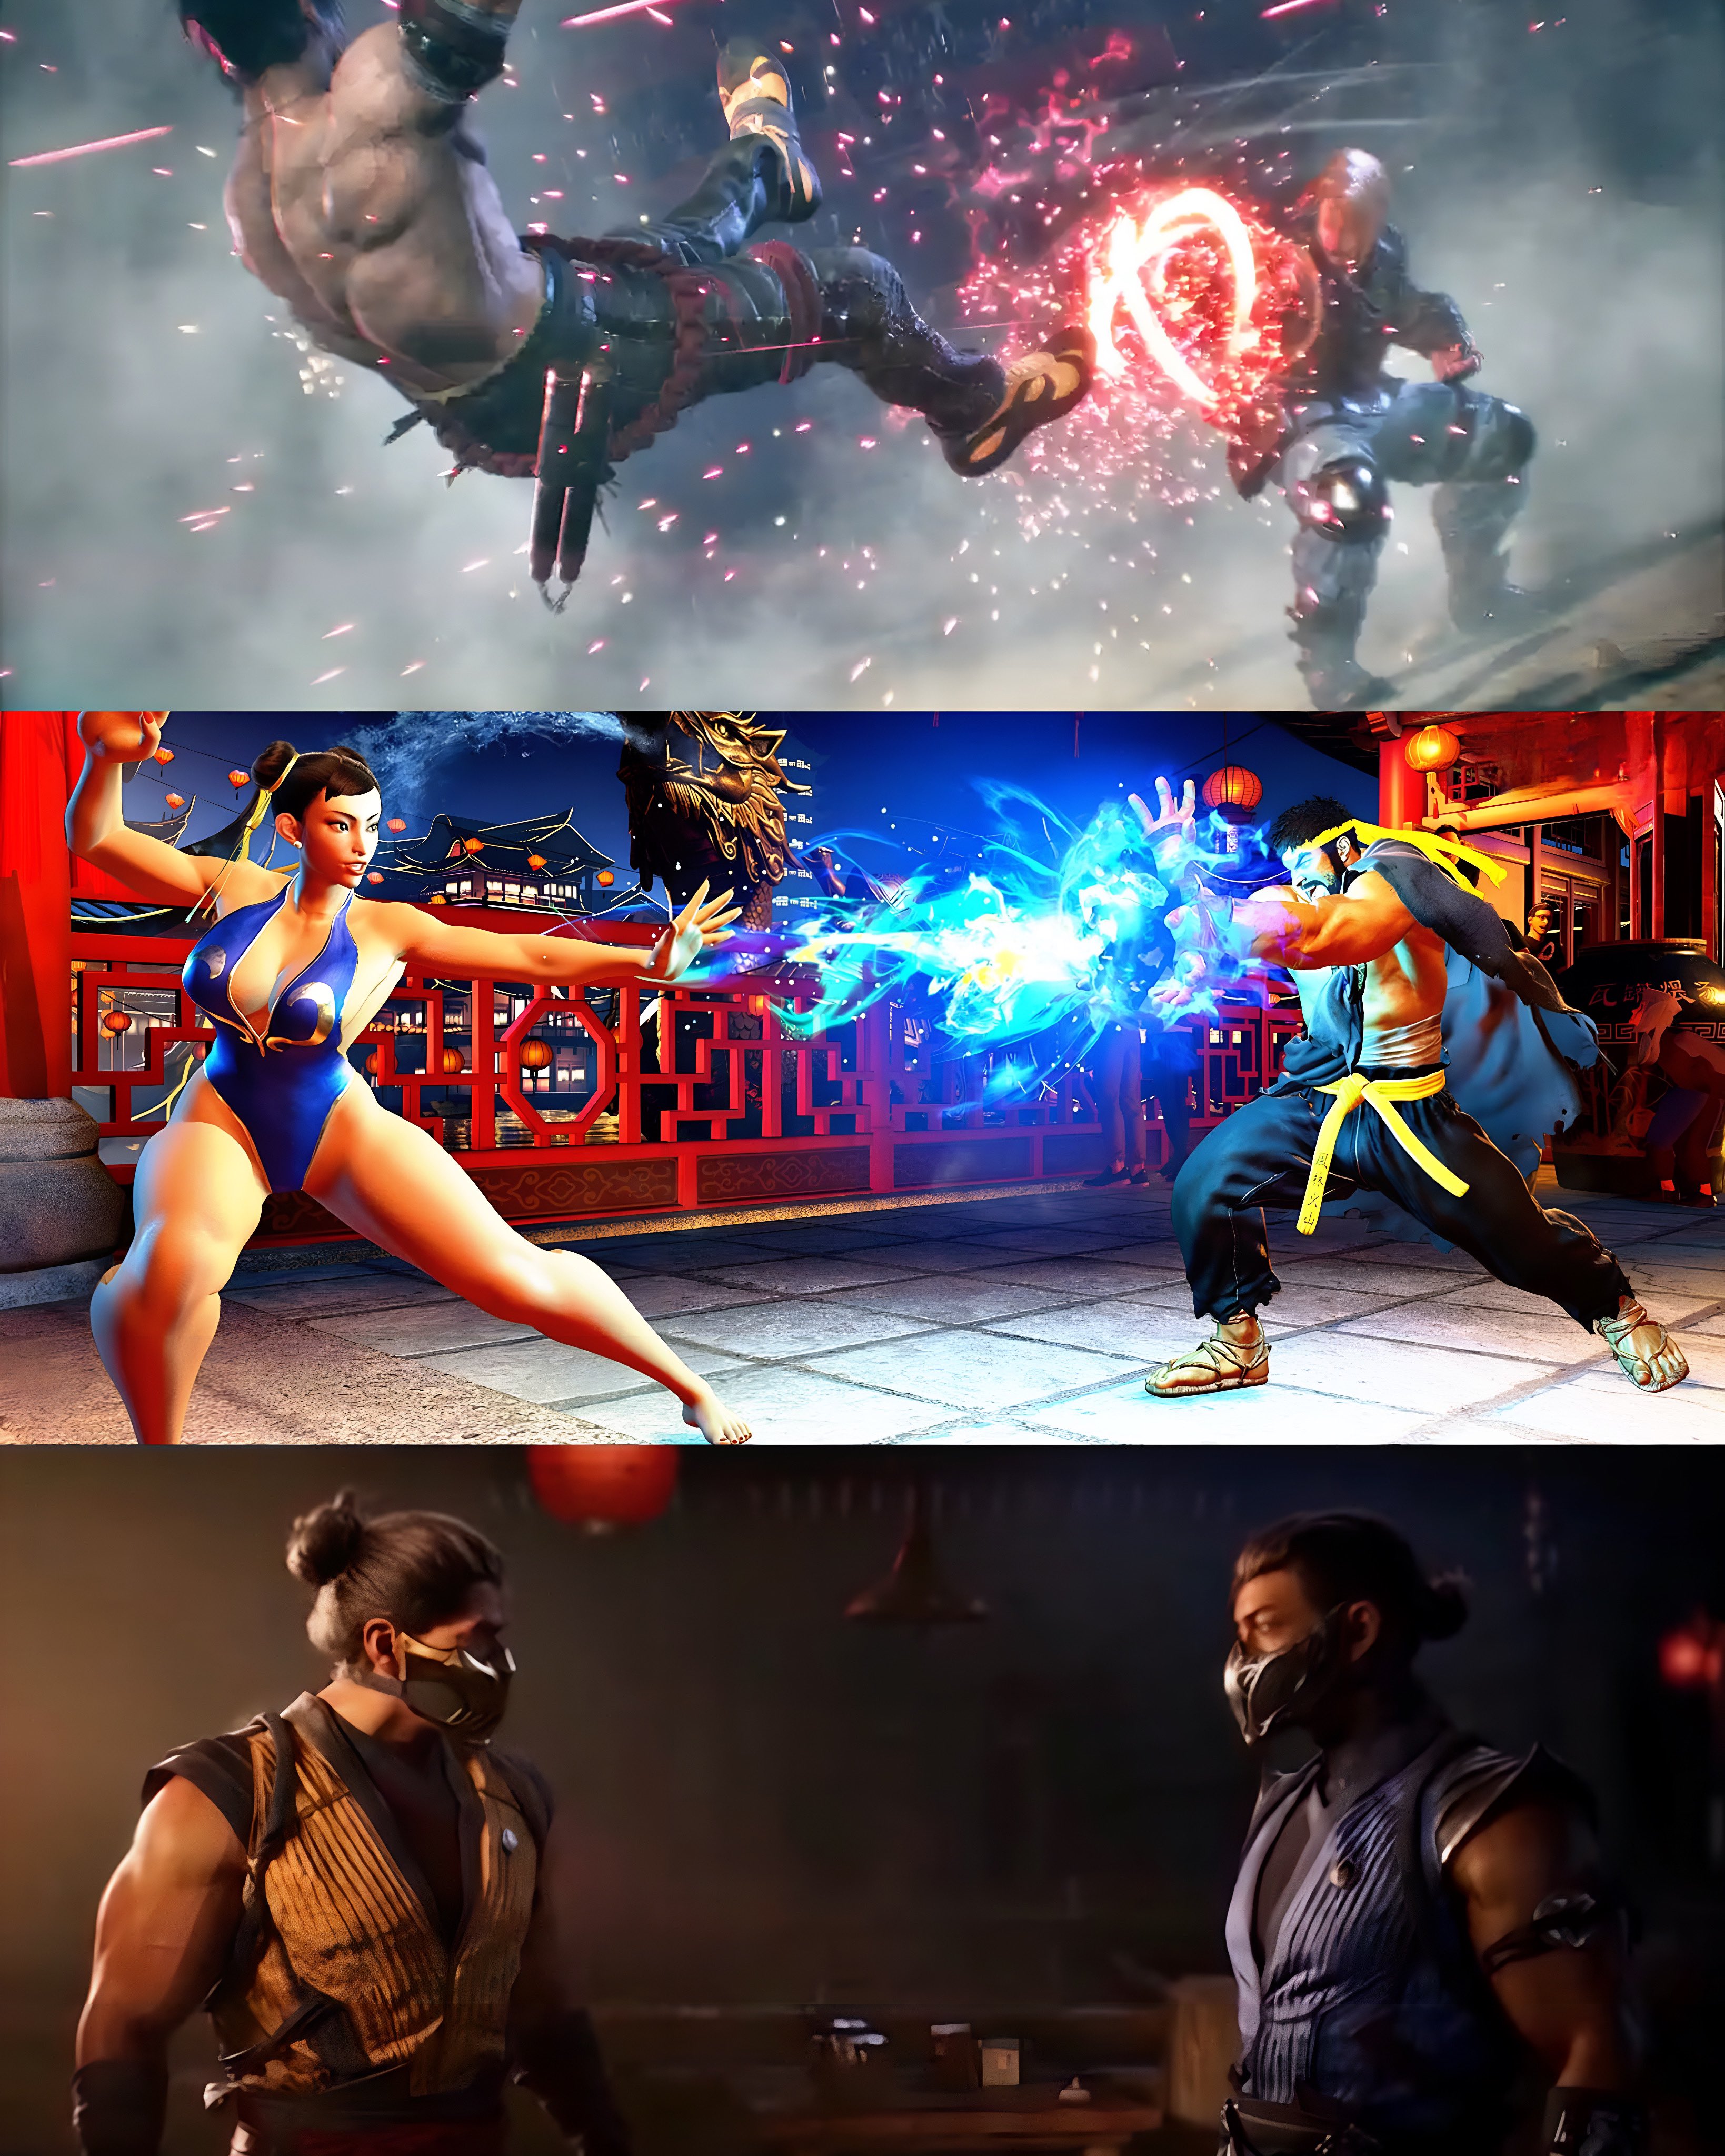 Street Fighter 6 Sets a High Bar for Mortal Kombat 1 & Tekken 8